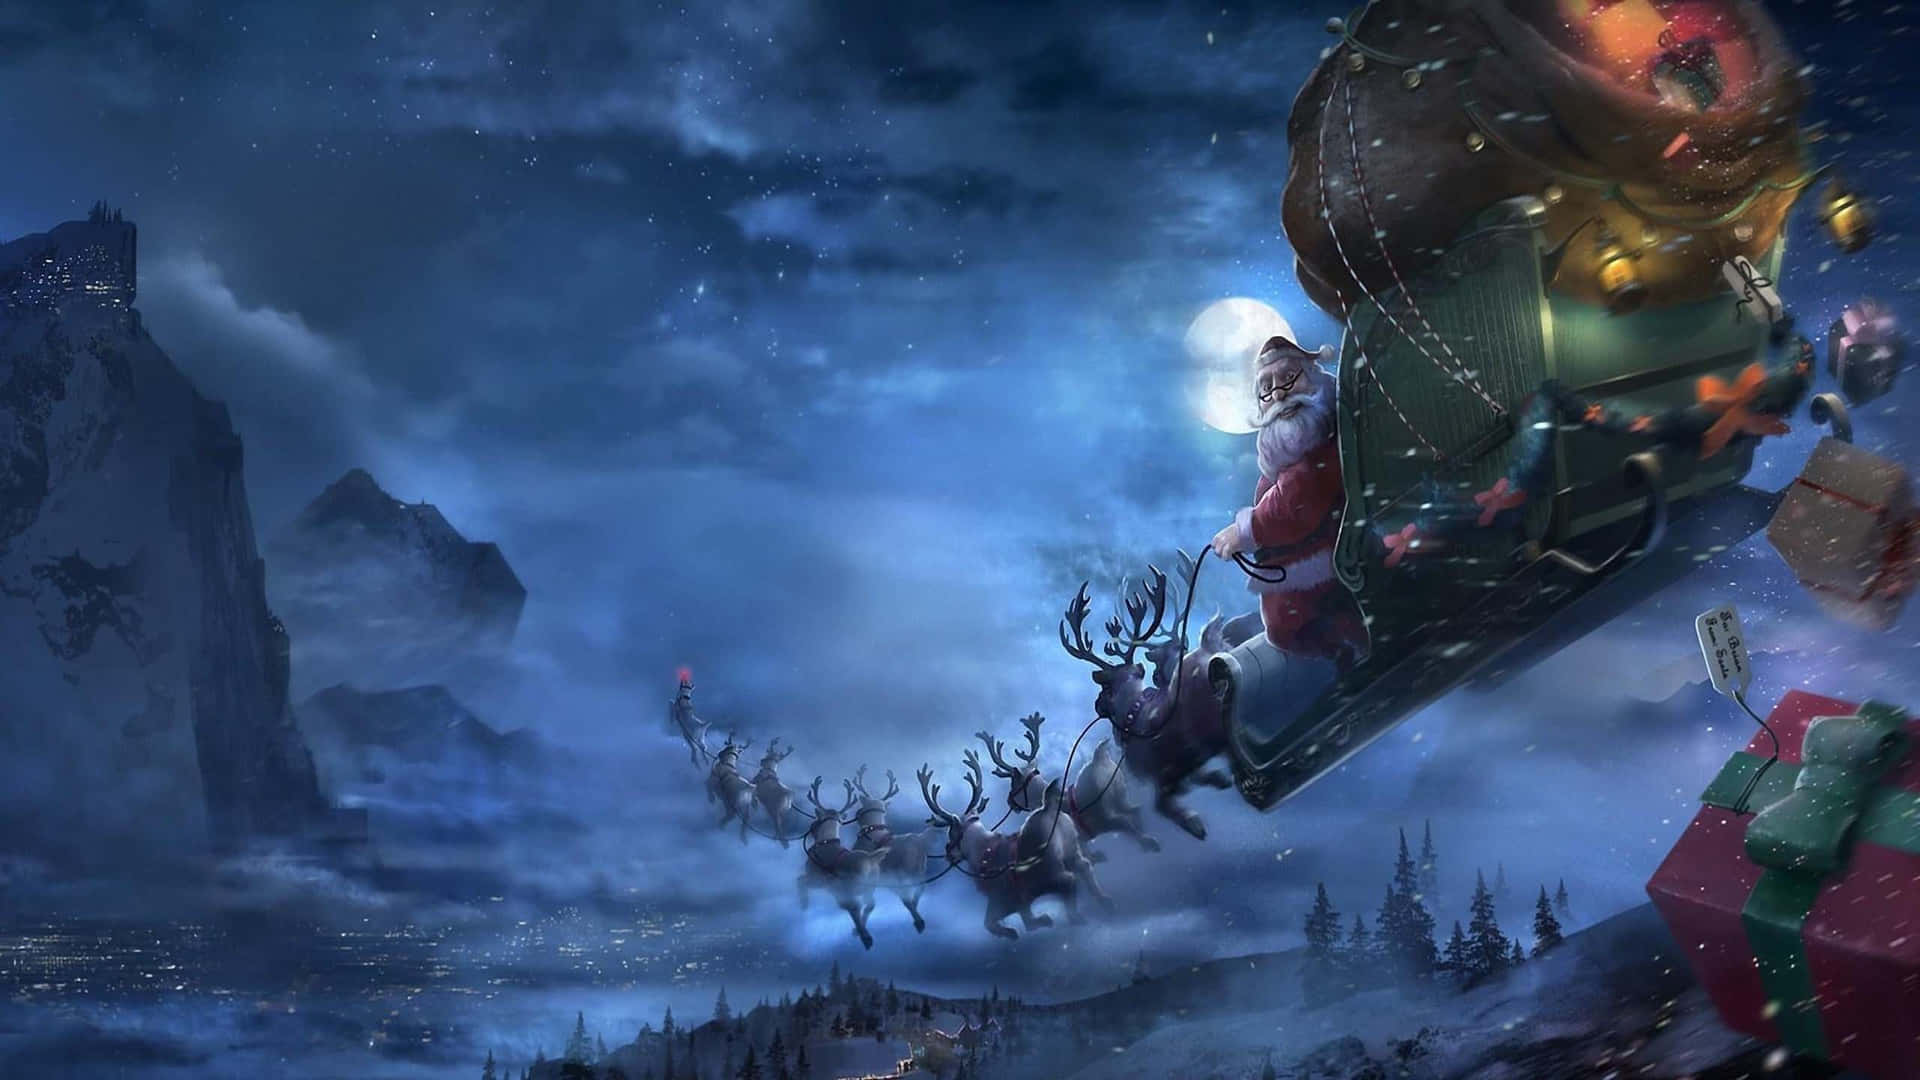 Reindeer in an idyllic winter landscape